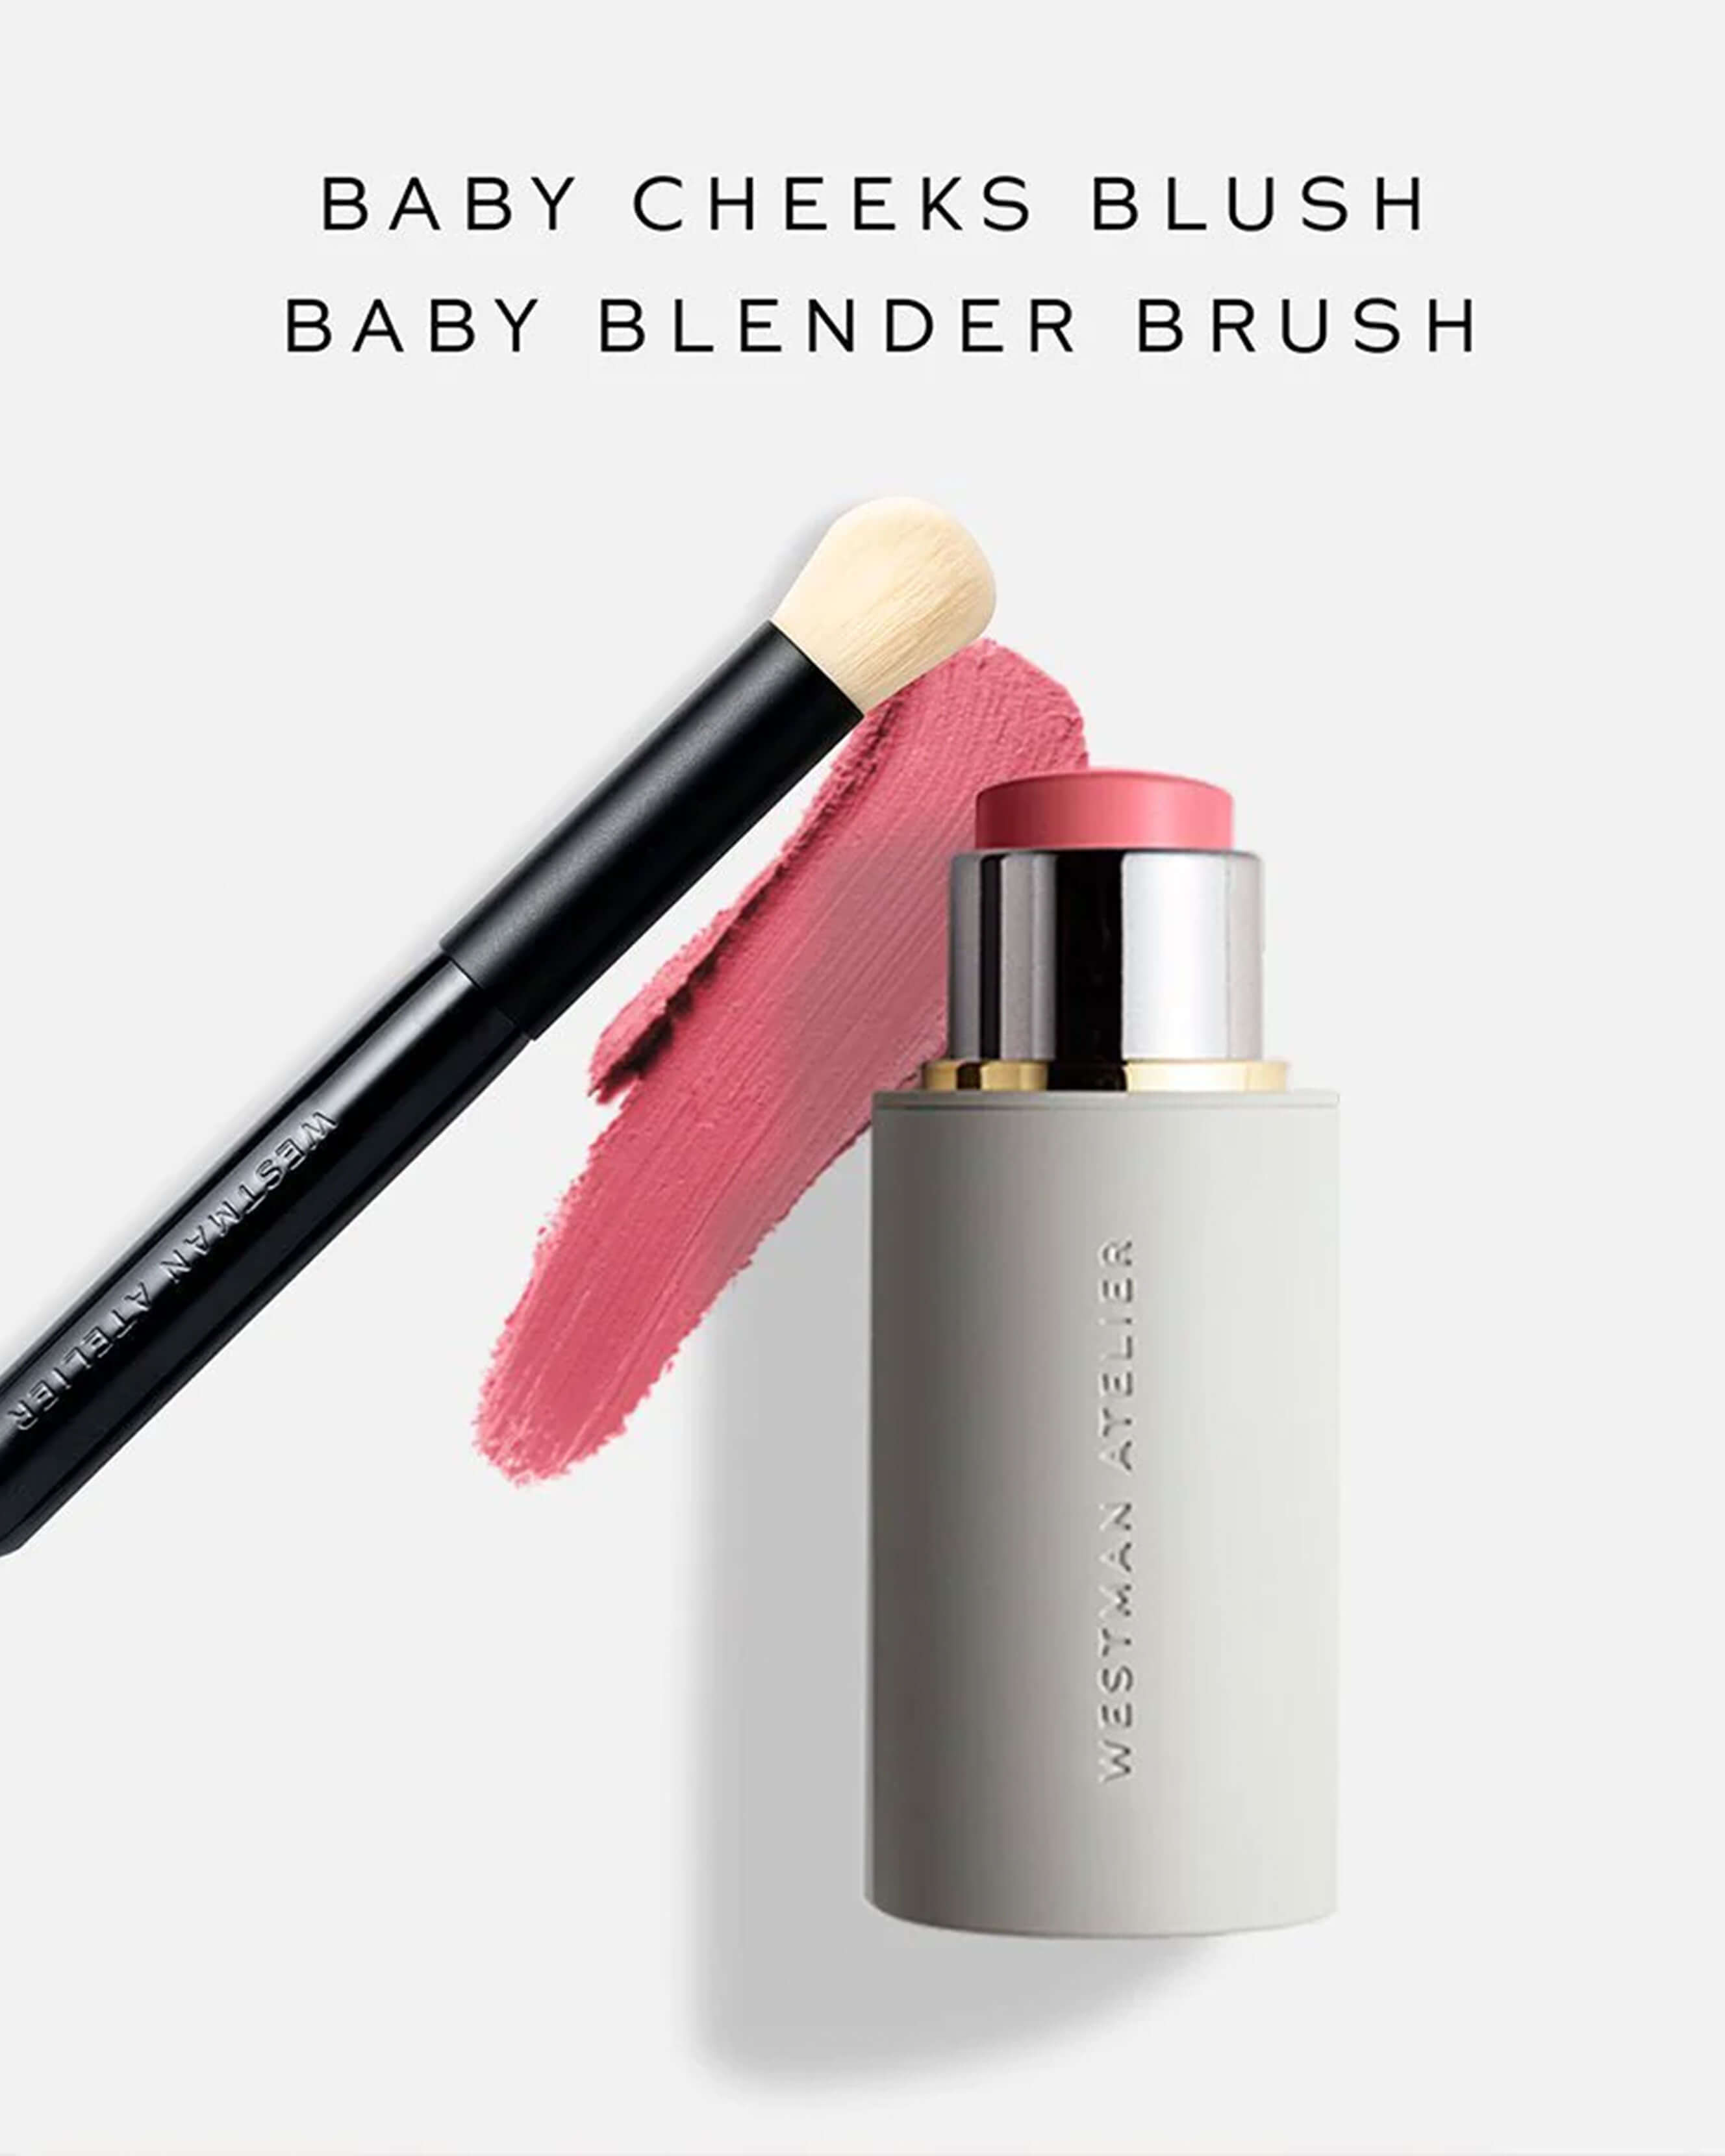 Baby Blender Brush, Clean Makeup